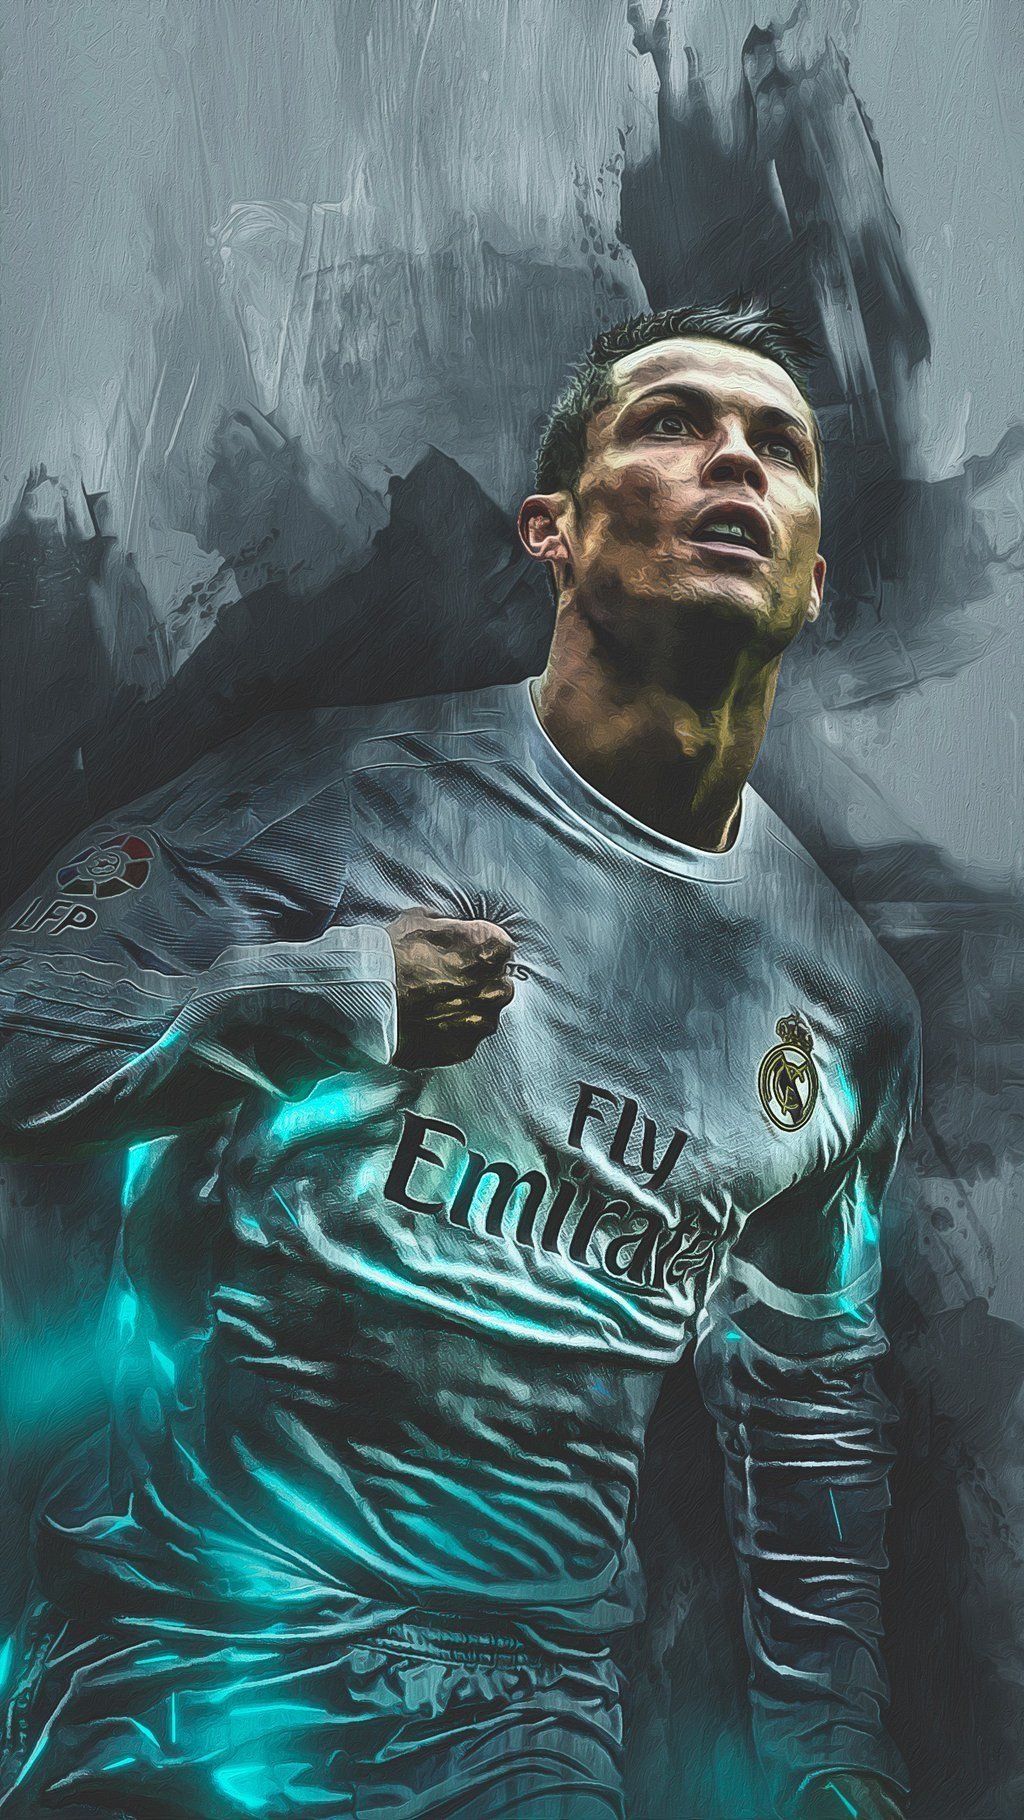 Ronaldo Black Wallpapers  Top 30 Best Ronaldo Black Wallpapers  HQ 